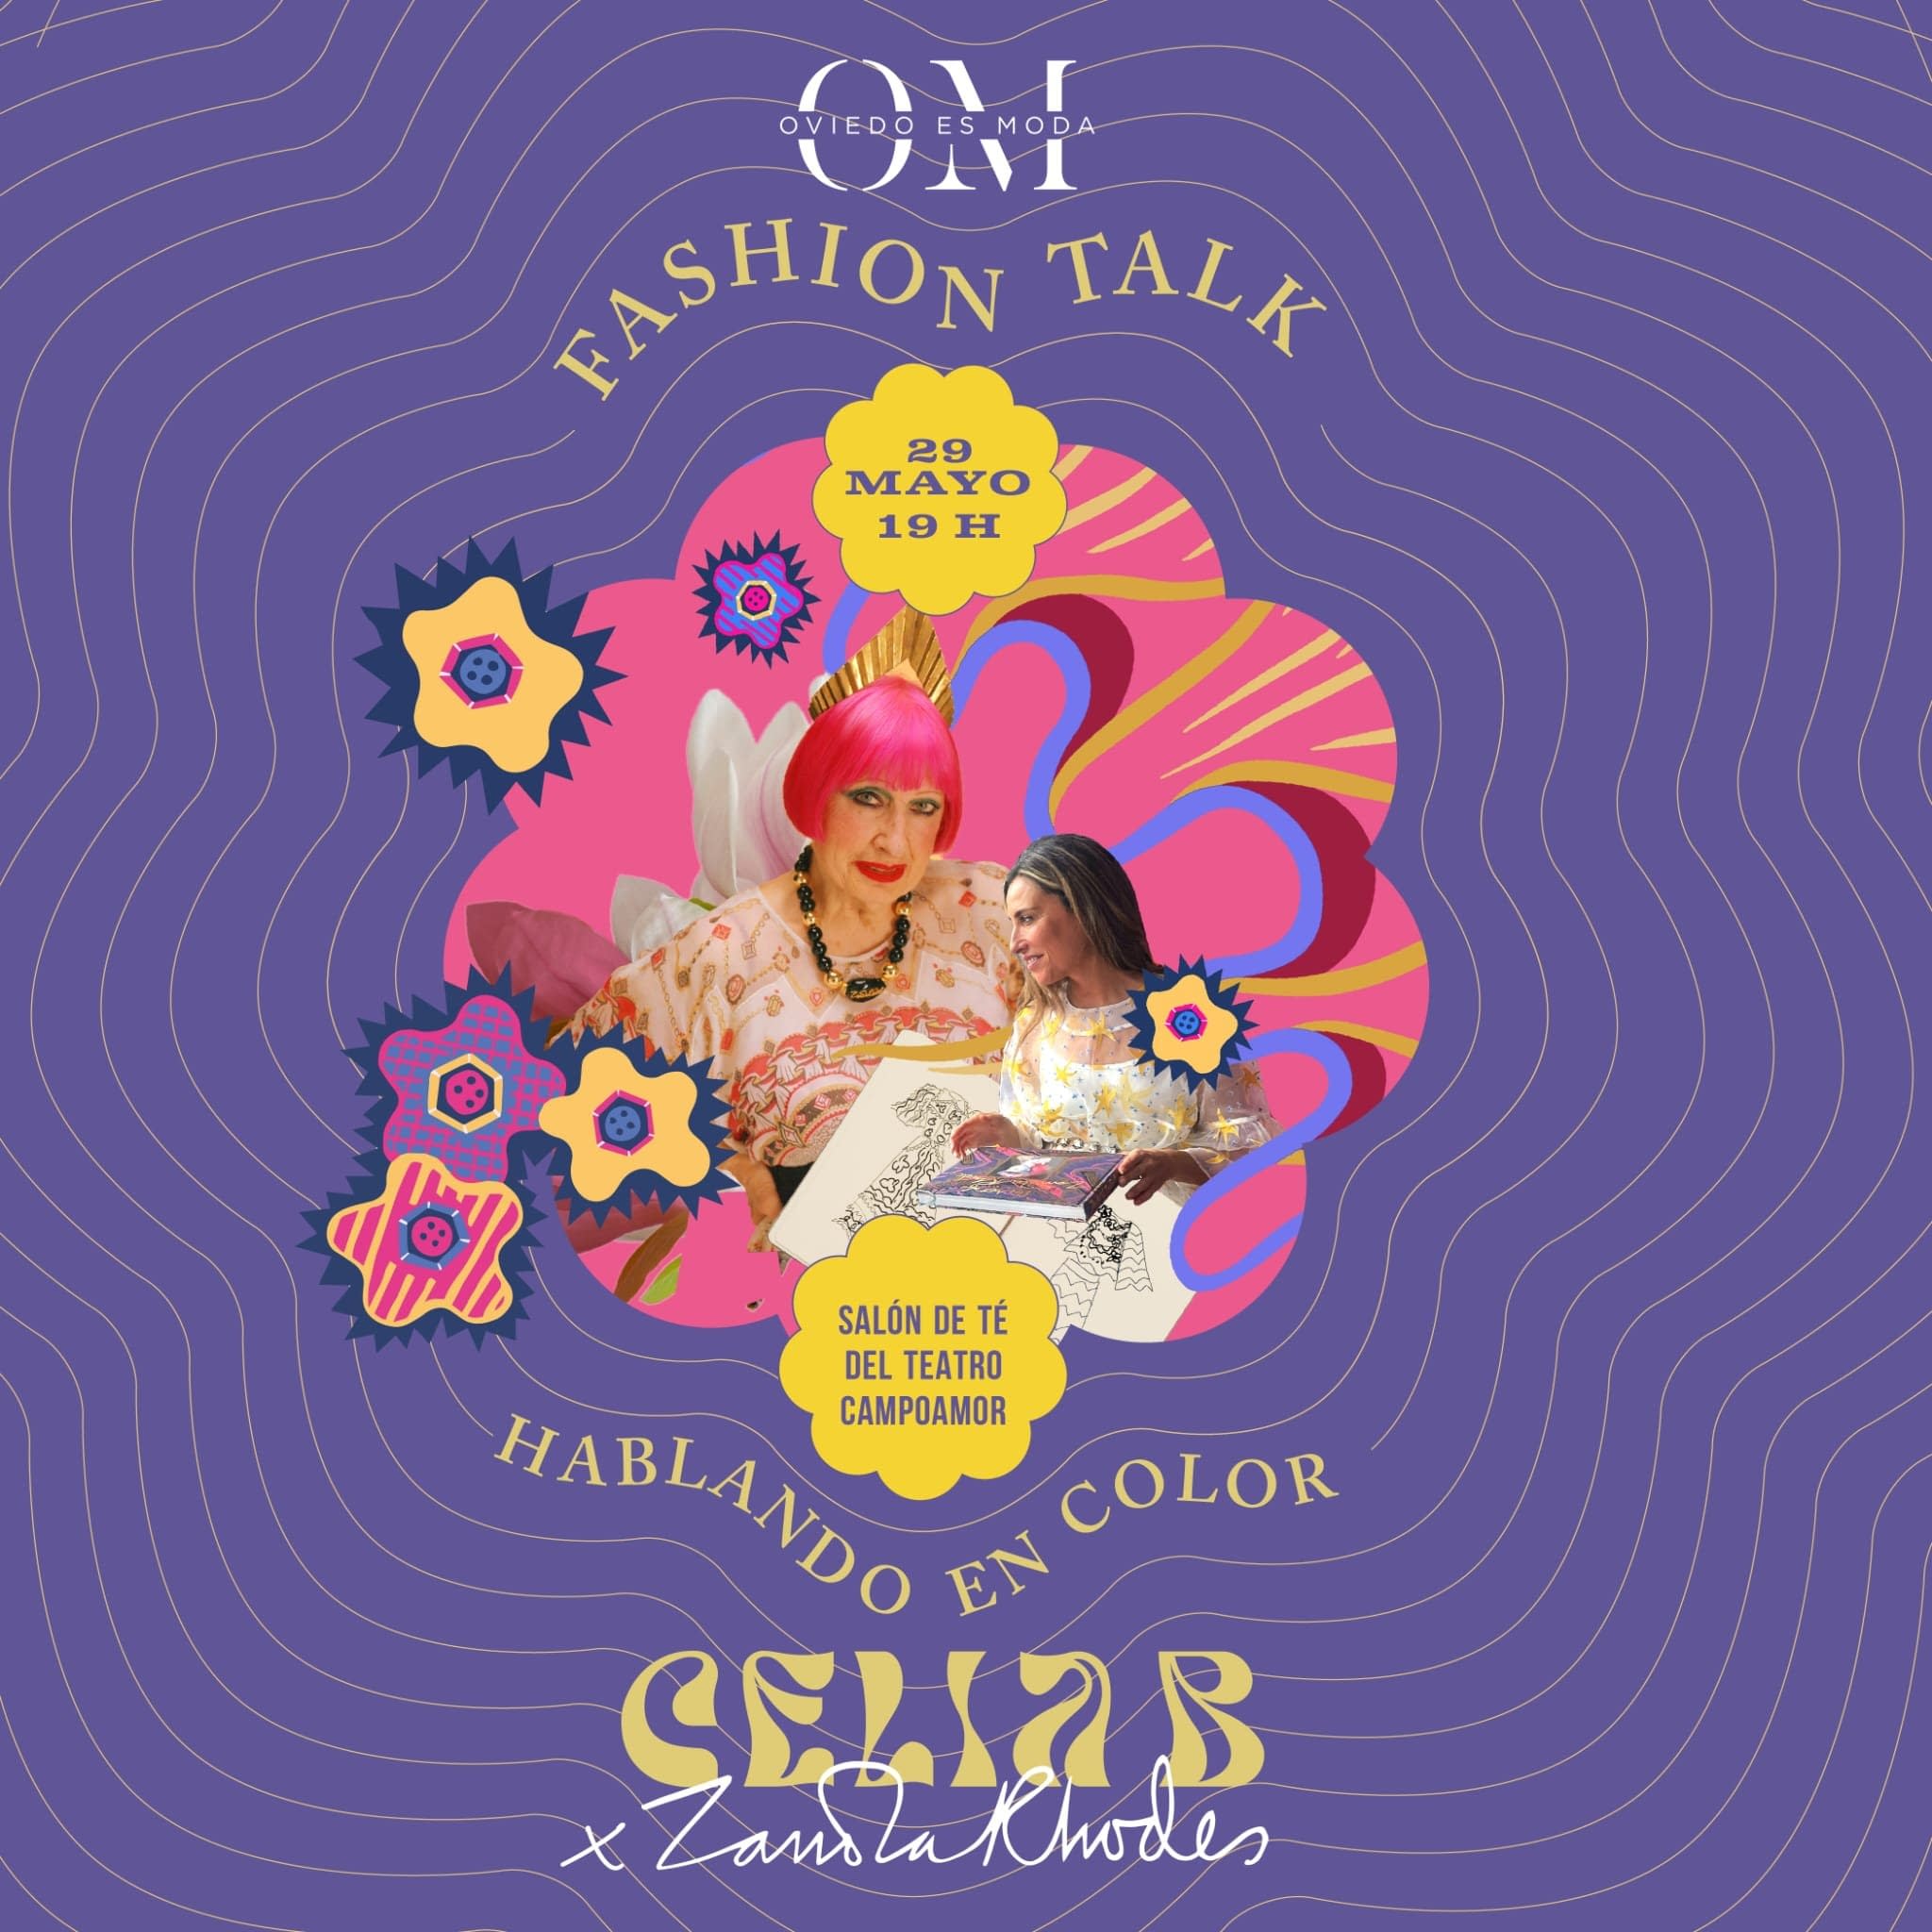 Fashion Talk: "Hablando en Color" CeliaB x Zandra Rhodes